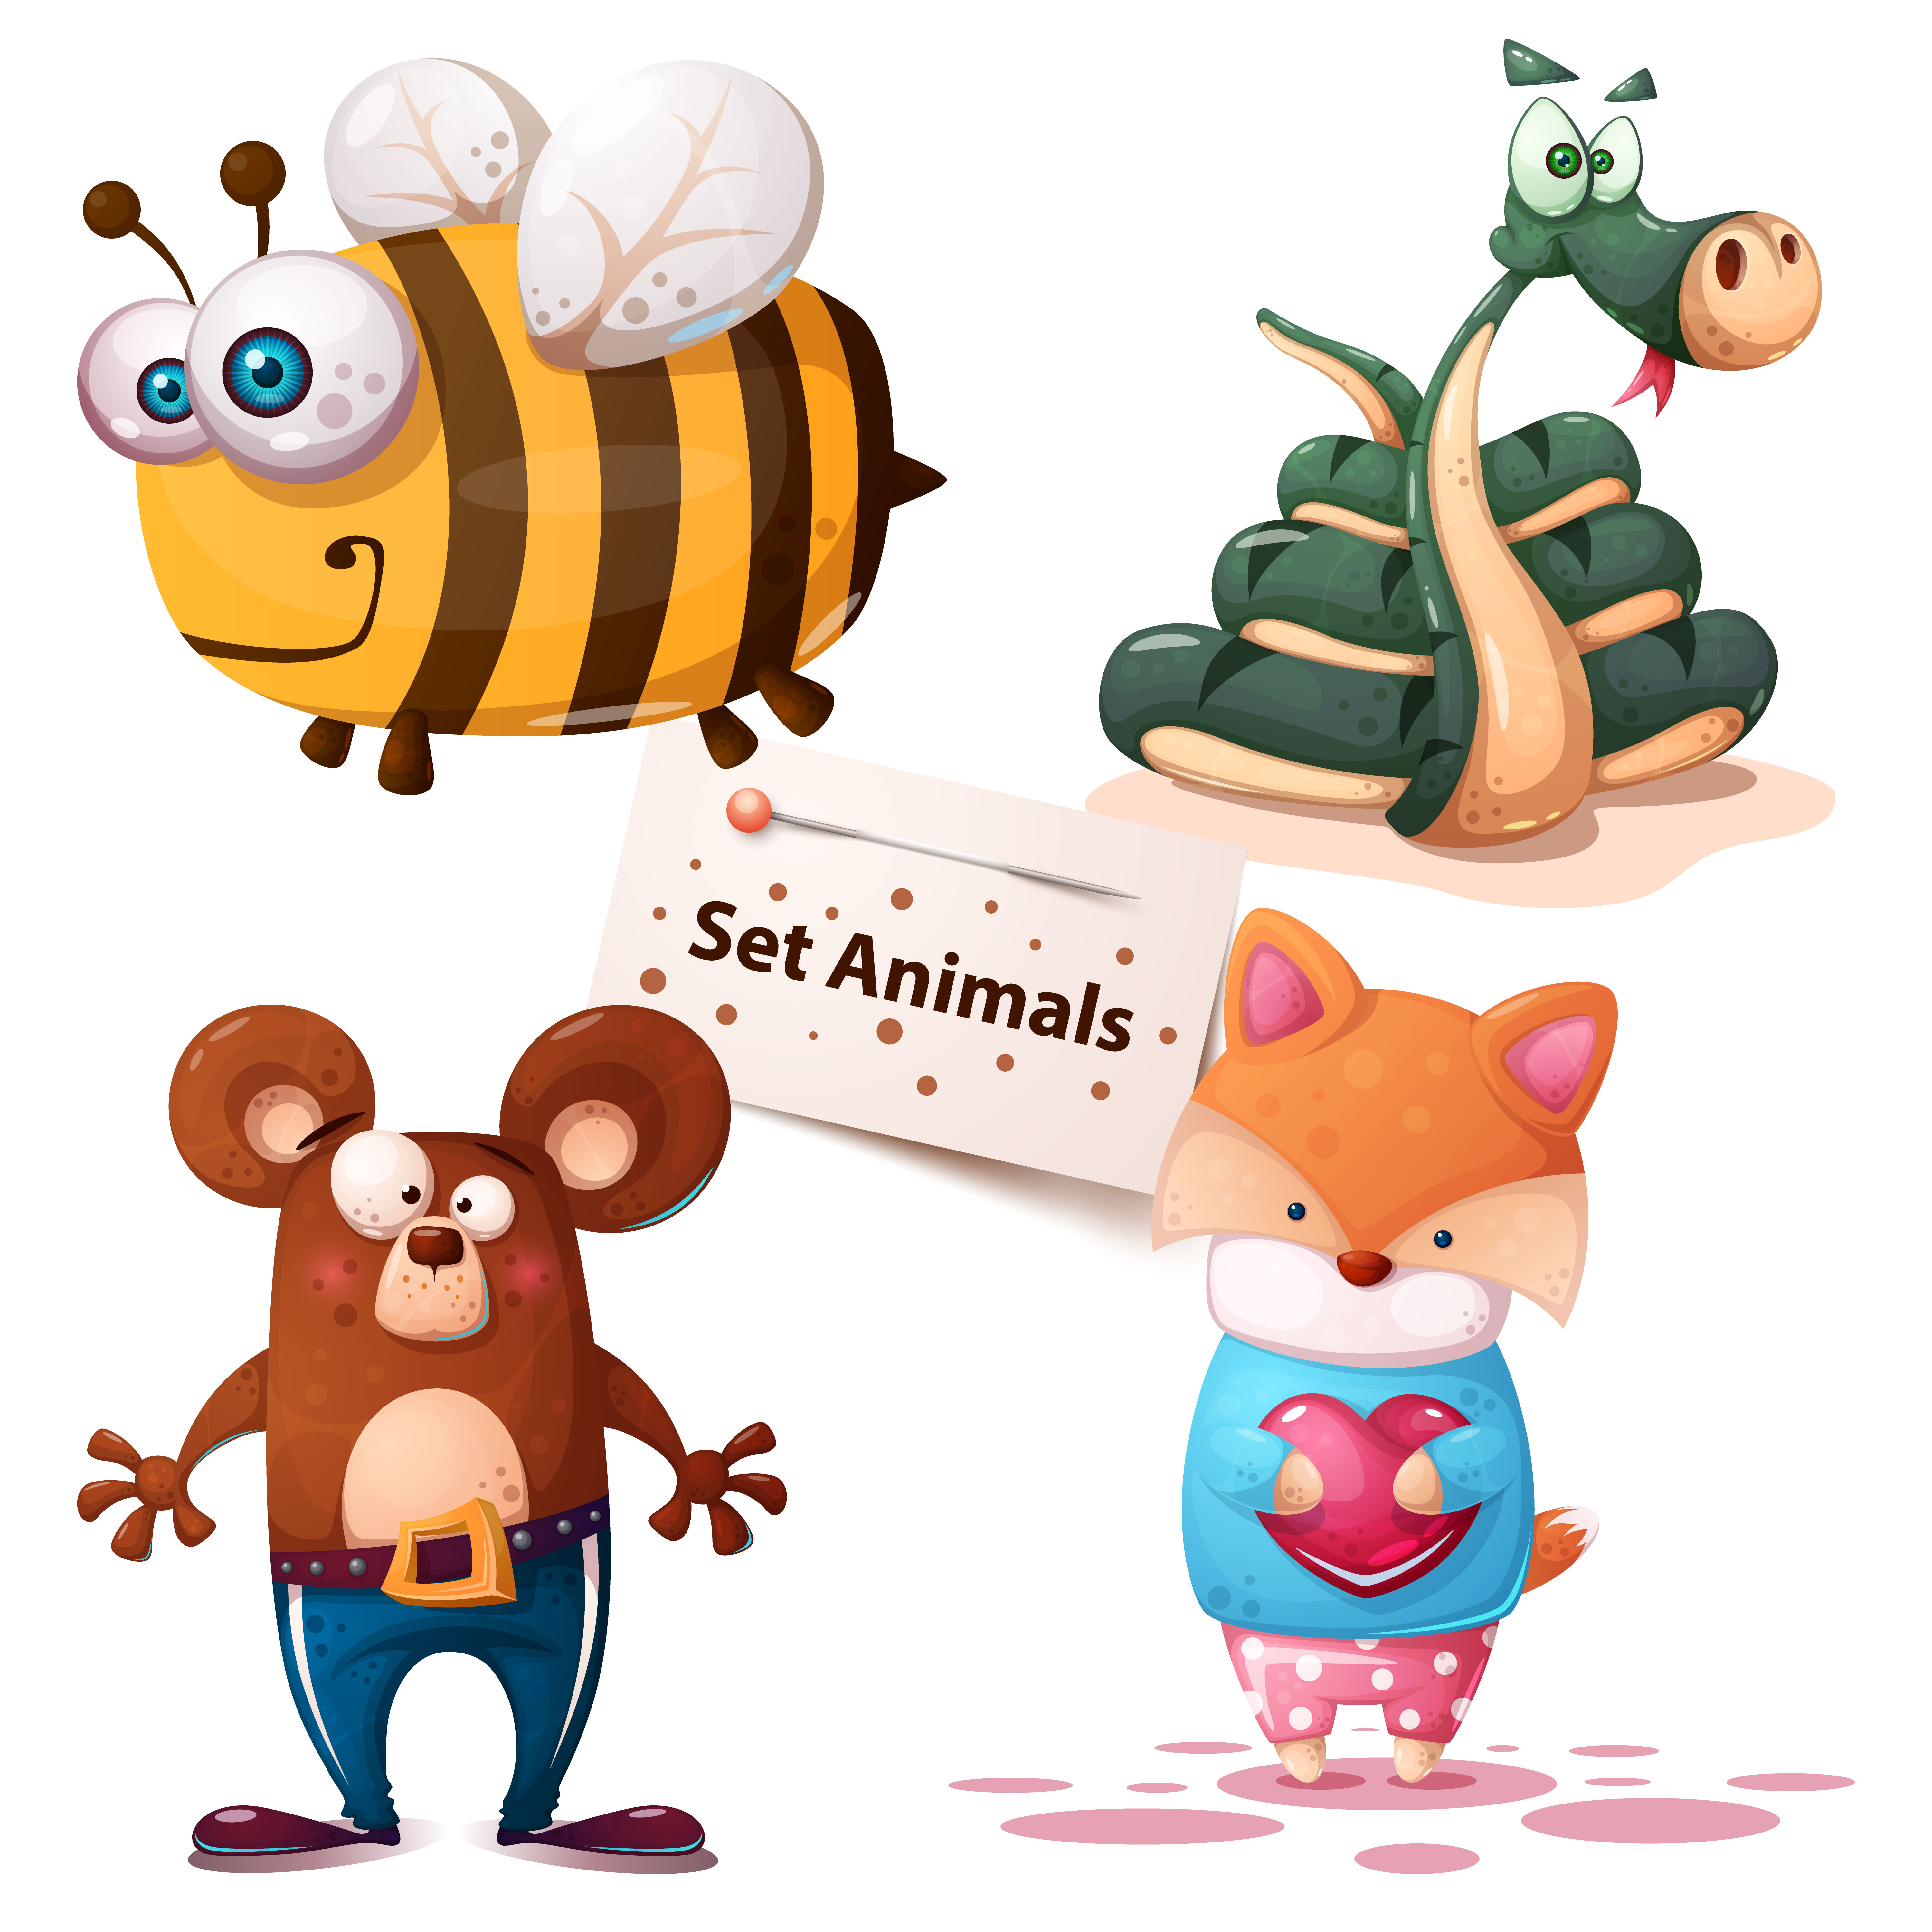 Download the Bee, snake, bear, fox - set animals 517272